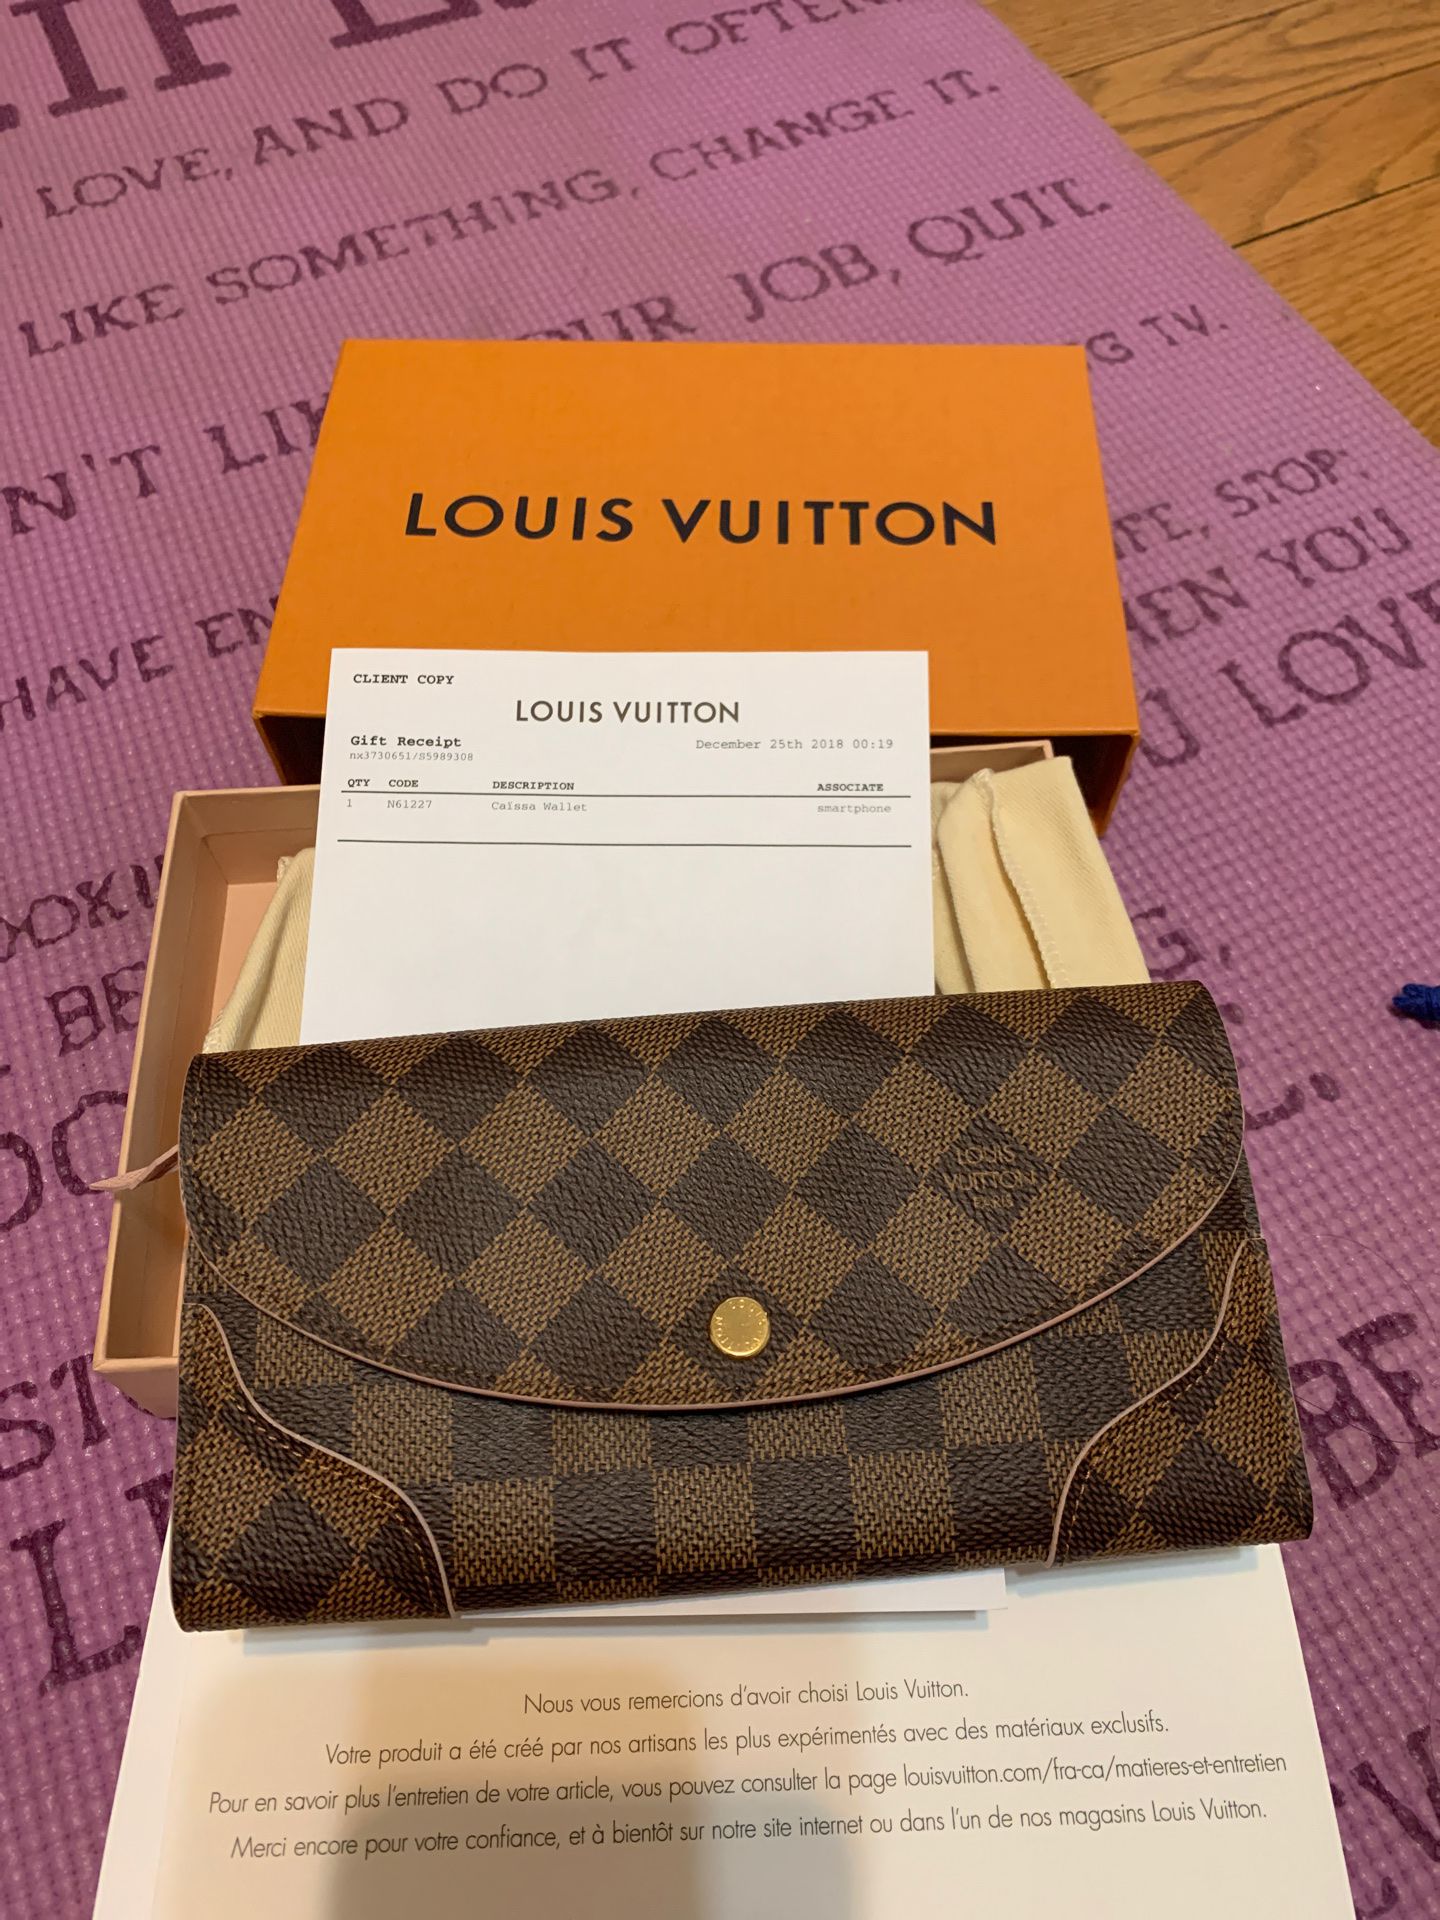 100% Authentic Perfect Condition Louis Vuitton Caissa Wallet